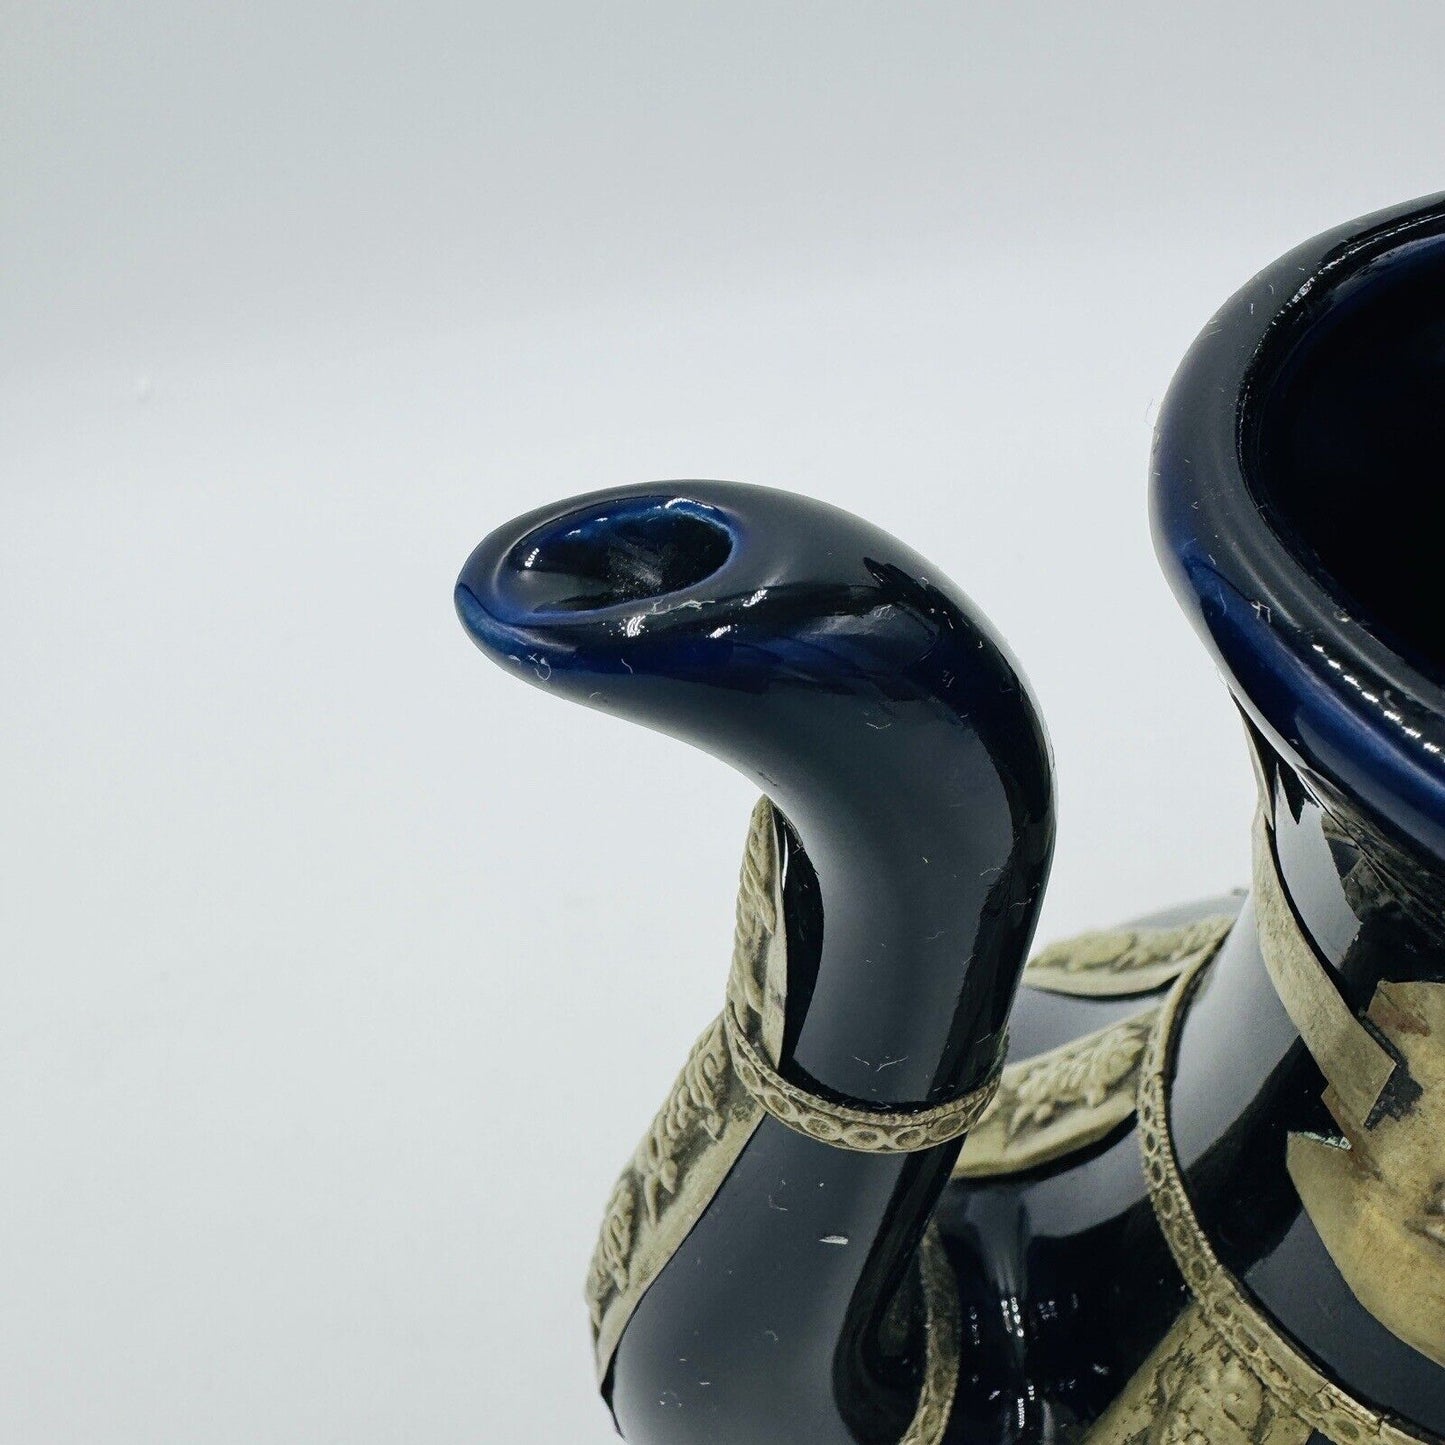 Antique Chinese Blue Cobalt Ornate Brass Design Teapot Porcelain